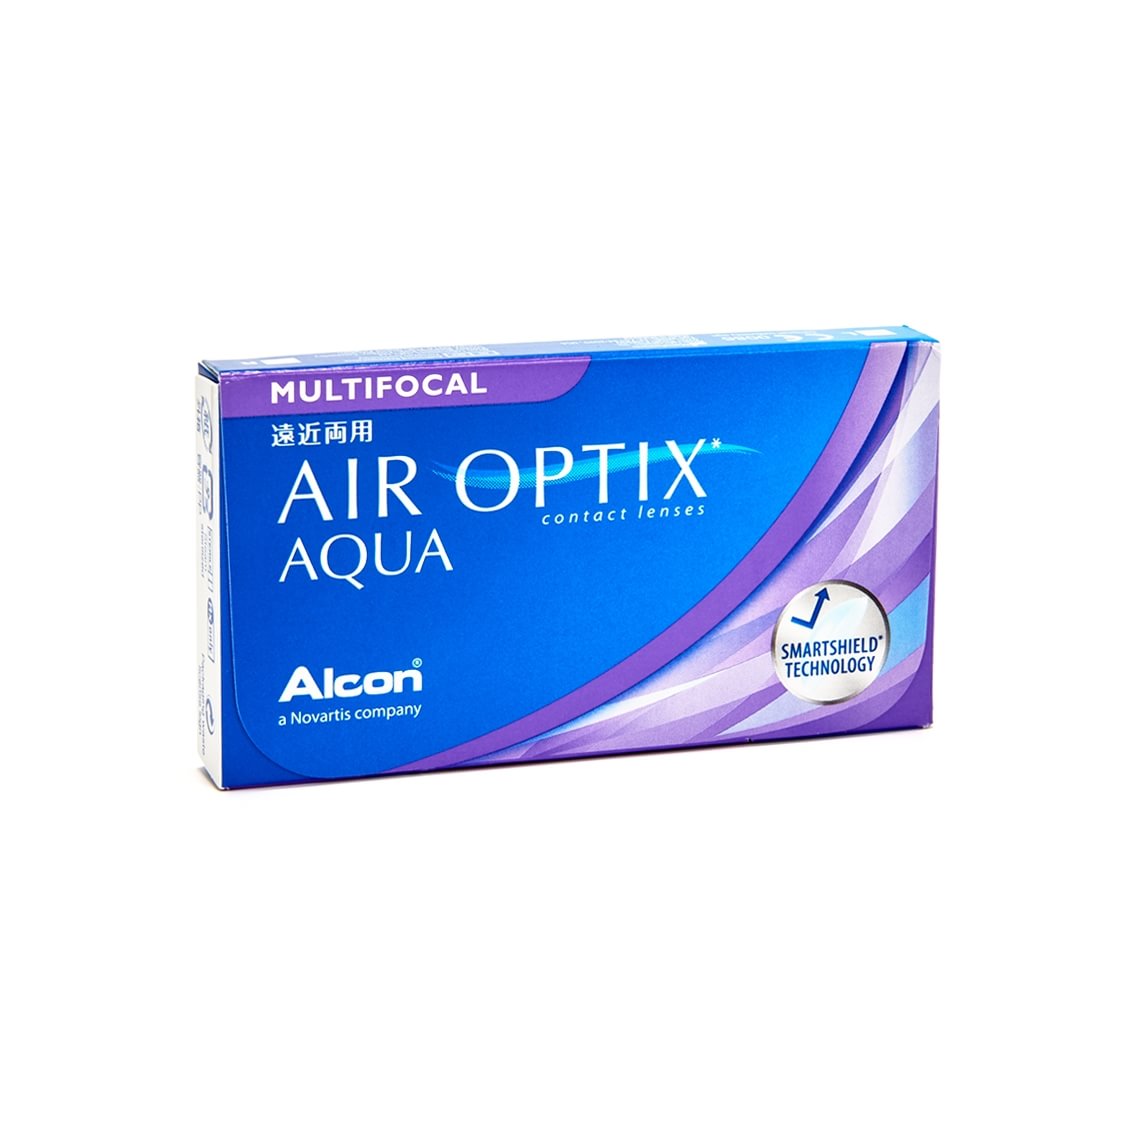 Air Optix Aqua Multifocal 6 st/box